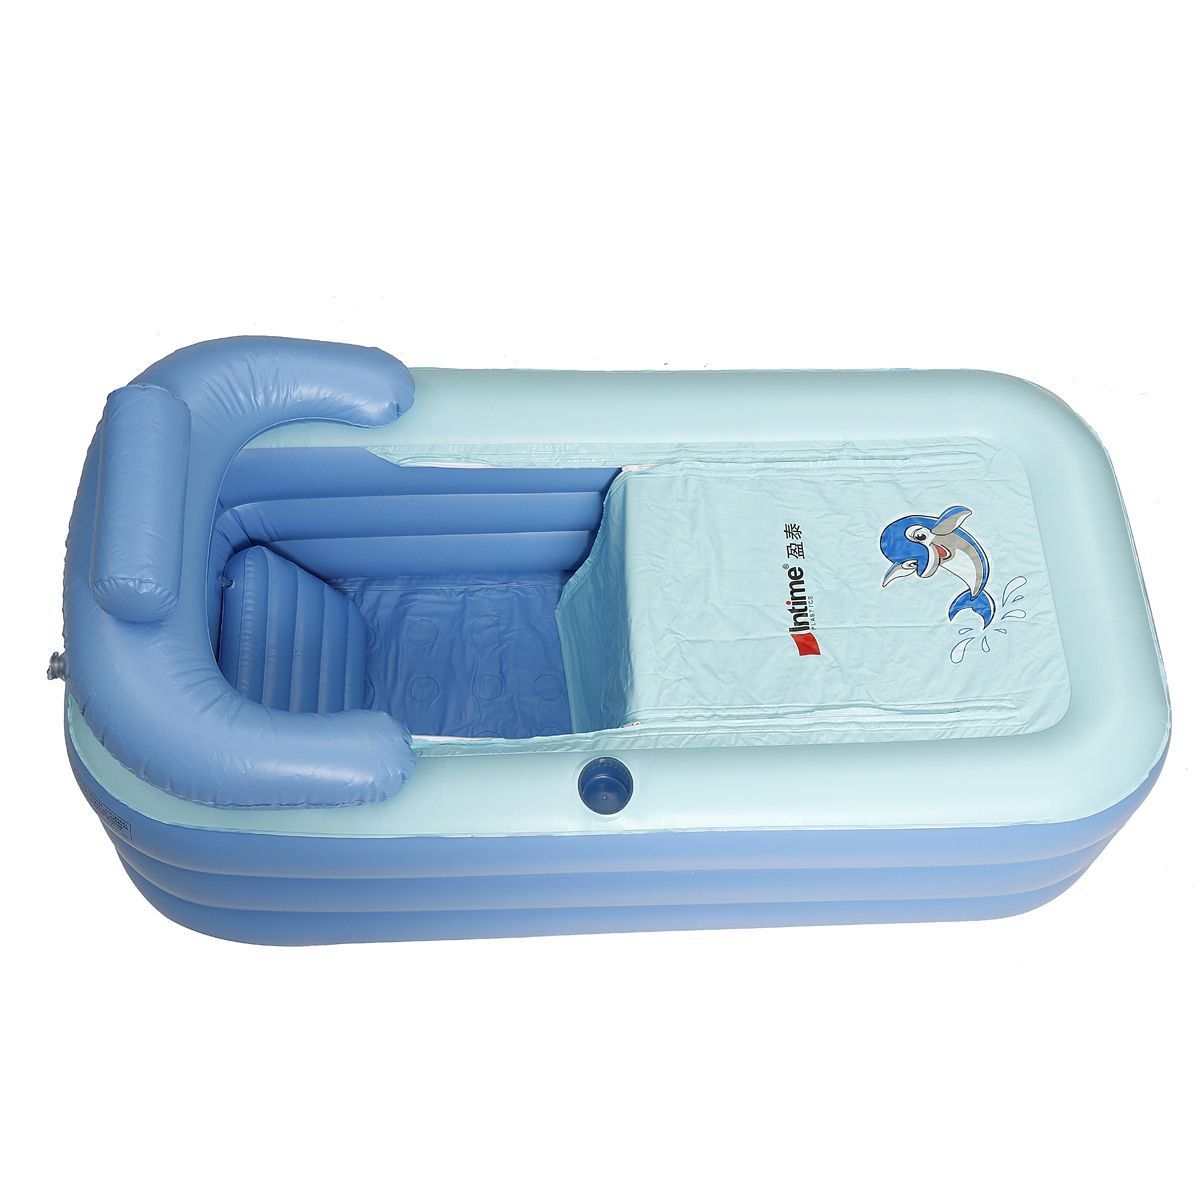 Adult-Child-Portable-Folding-Inflatable-Air-Bathtub-Warm-SPA-Blow-Up-Travel-Bath-1554015